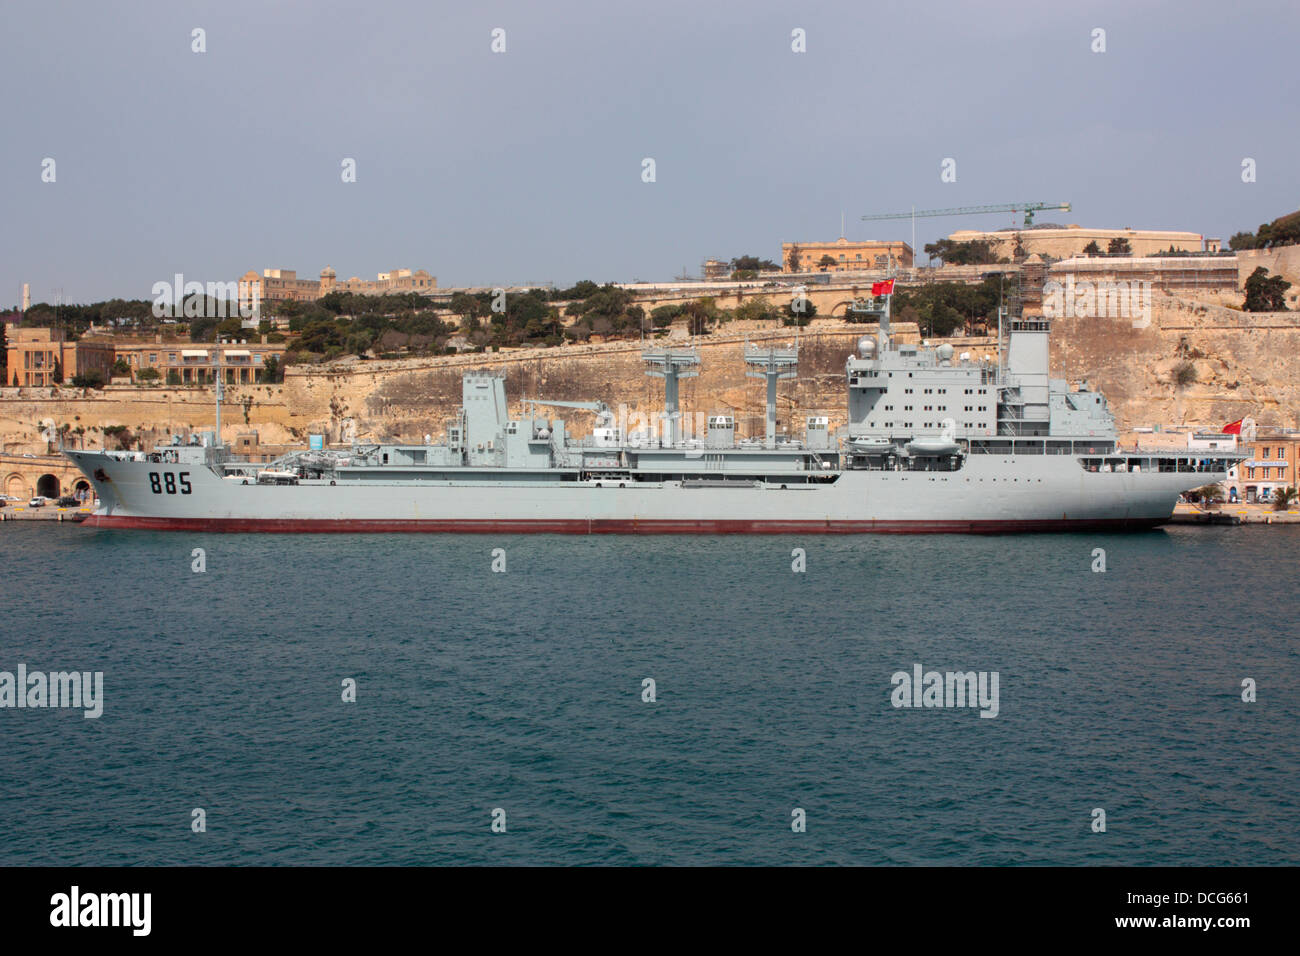 La marina militare cinese Qinghaihu oliatore (pennant numero 885) a Malta Foto Stock